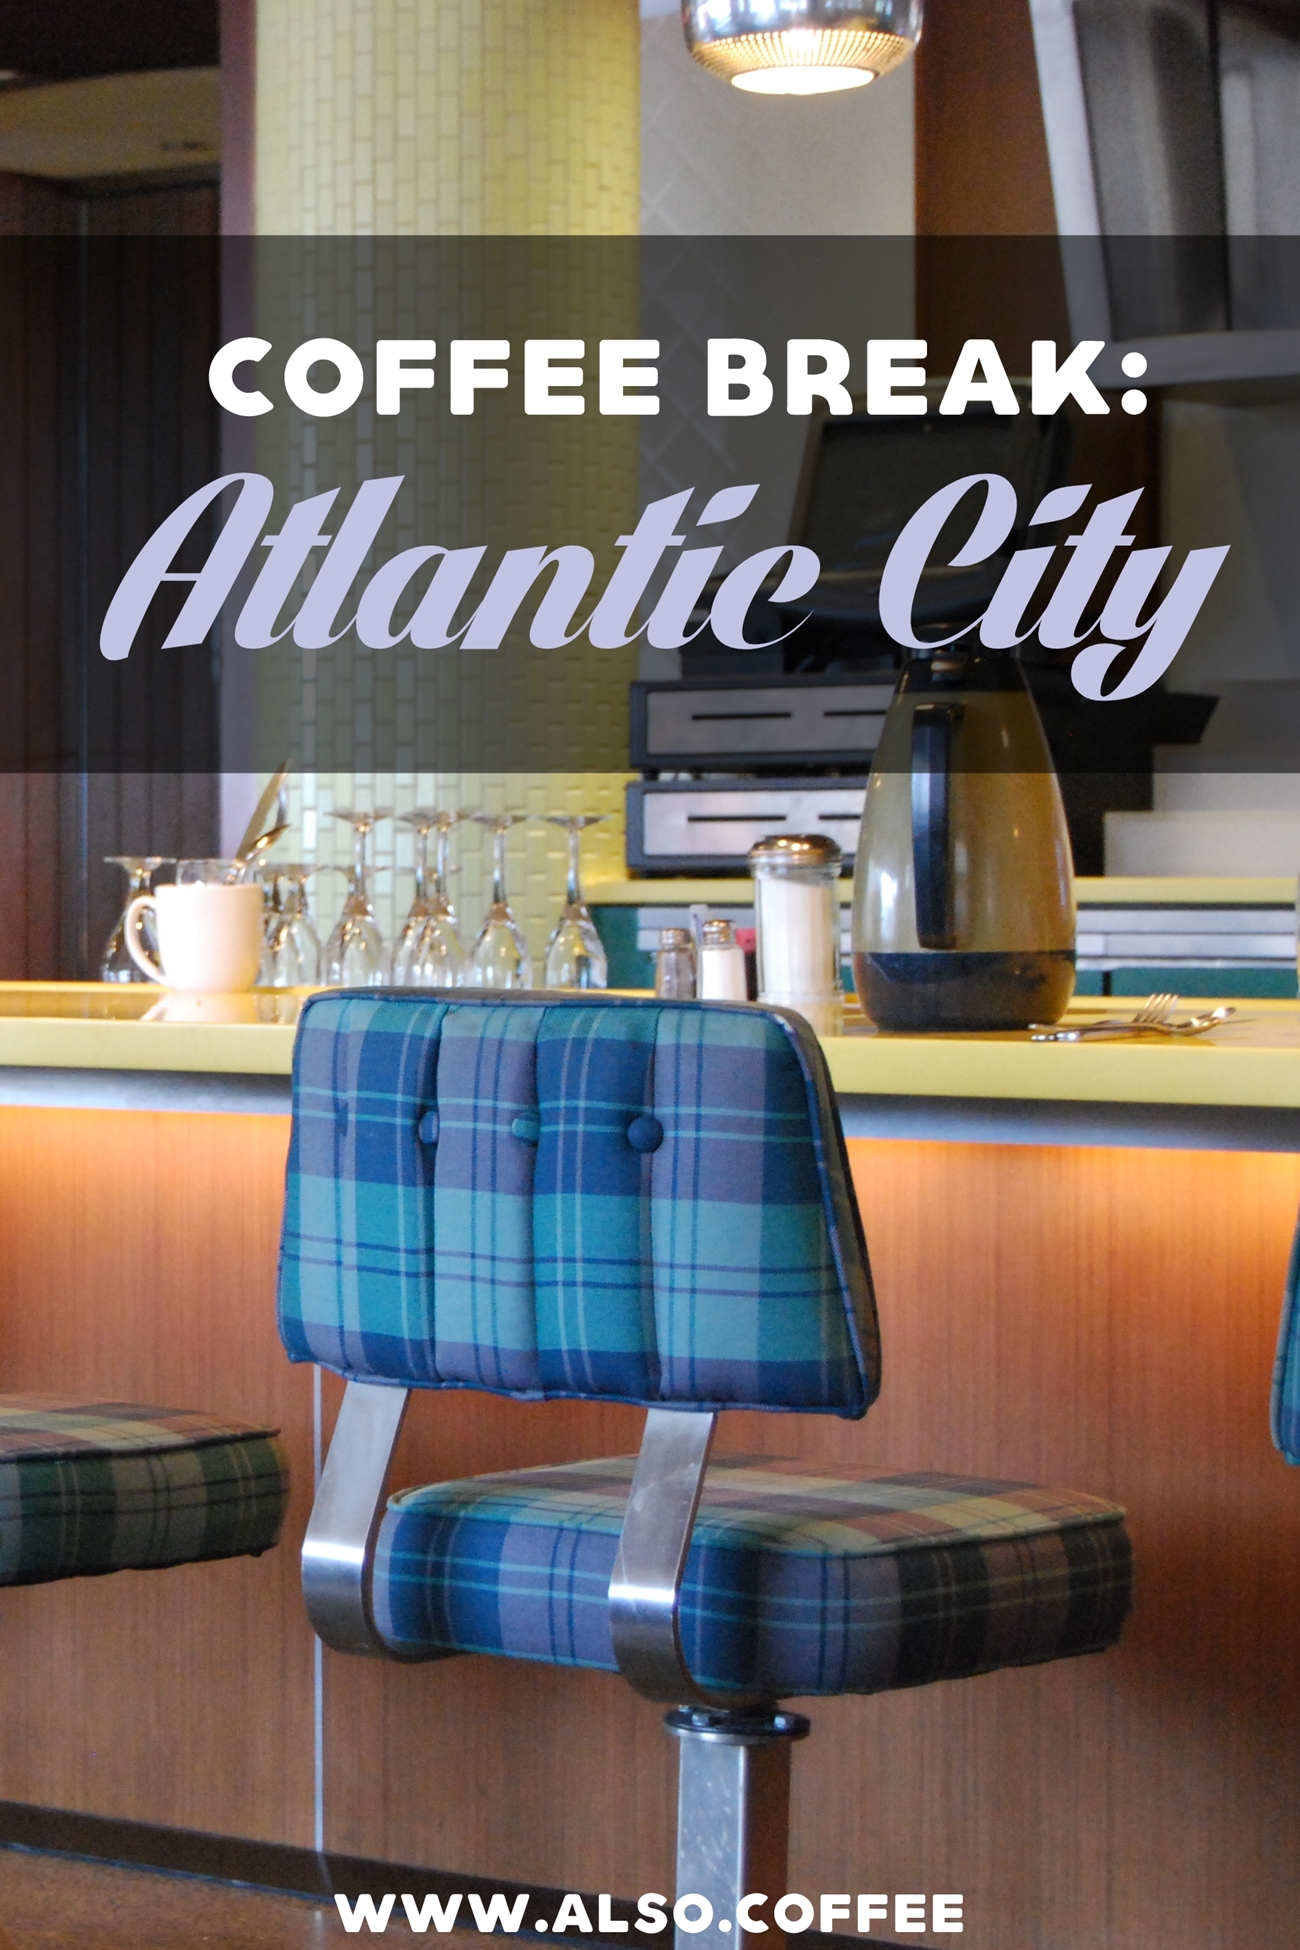 Coffee Break Teplitzky's at The Chelsea Hotel in Atlantic City, NJ